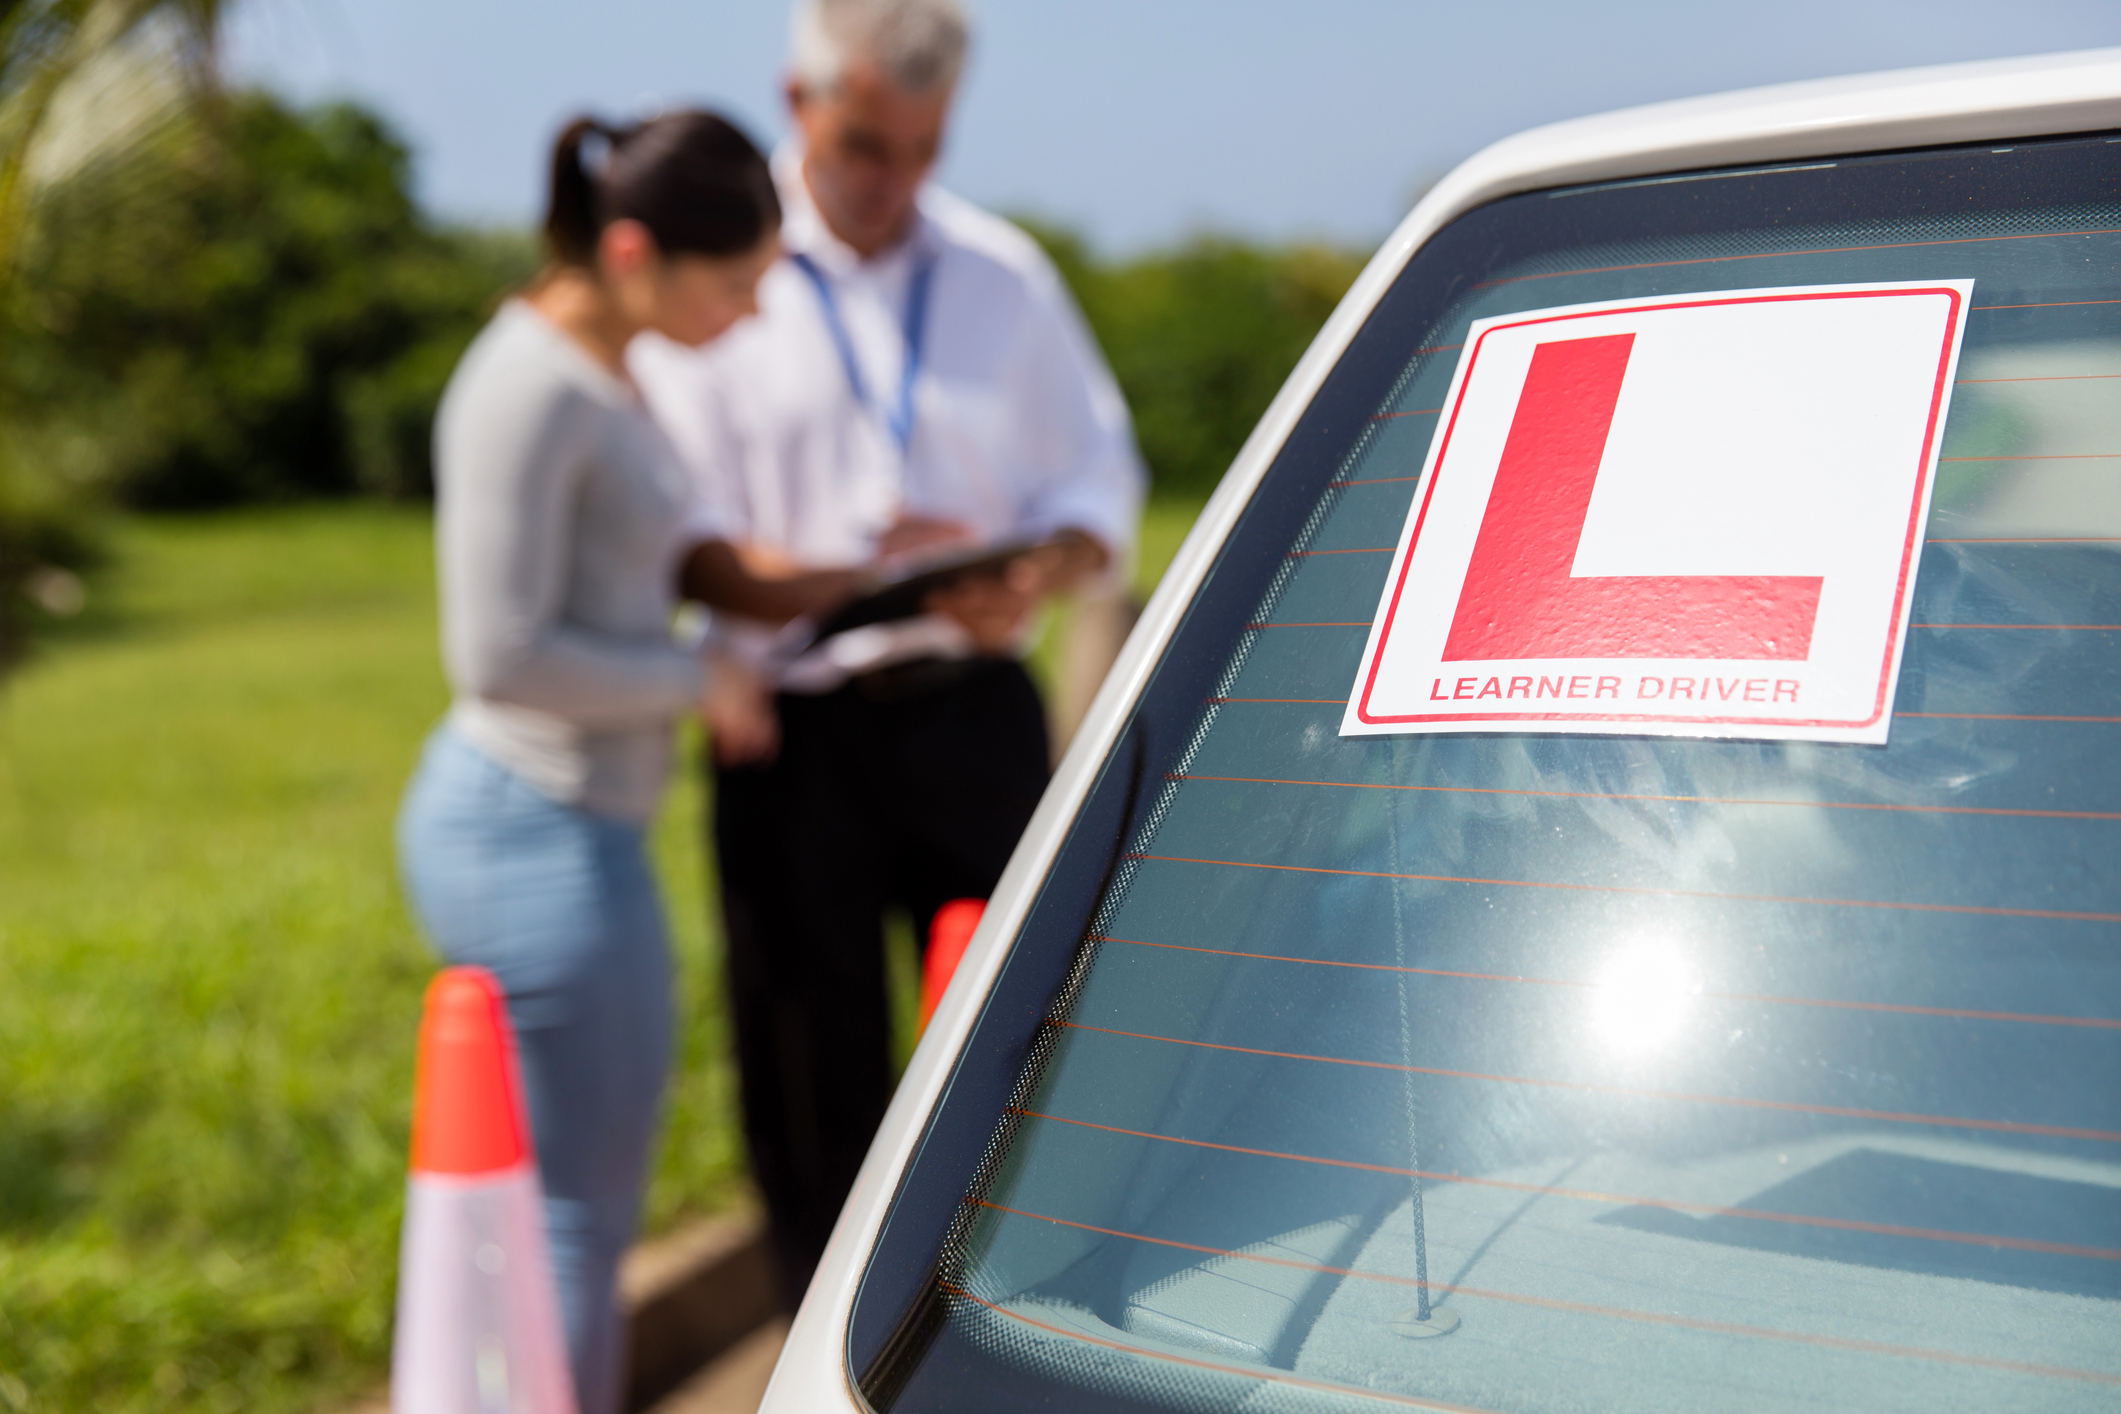 Zutobi: ‘Belgium one of hardest countries to pass driving test’